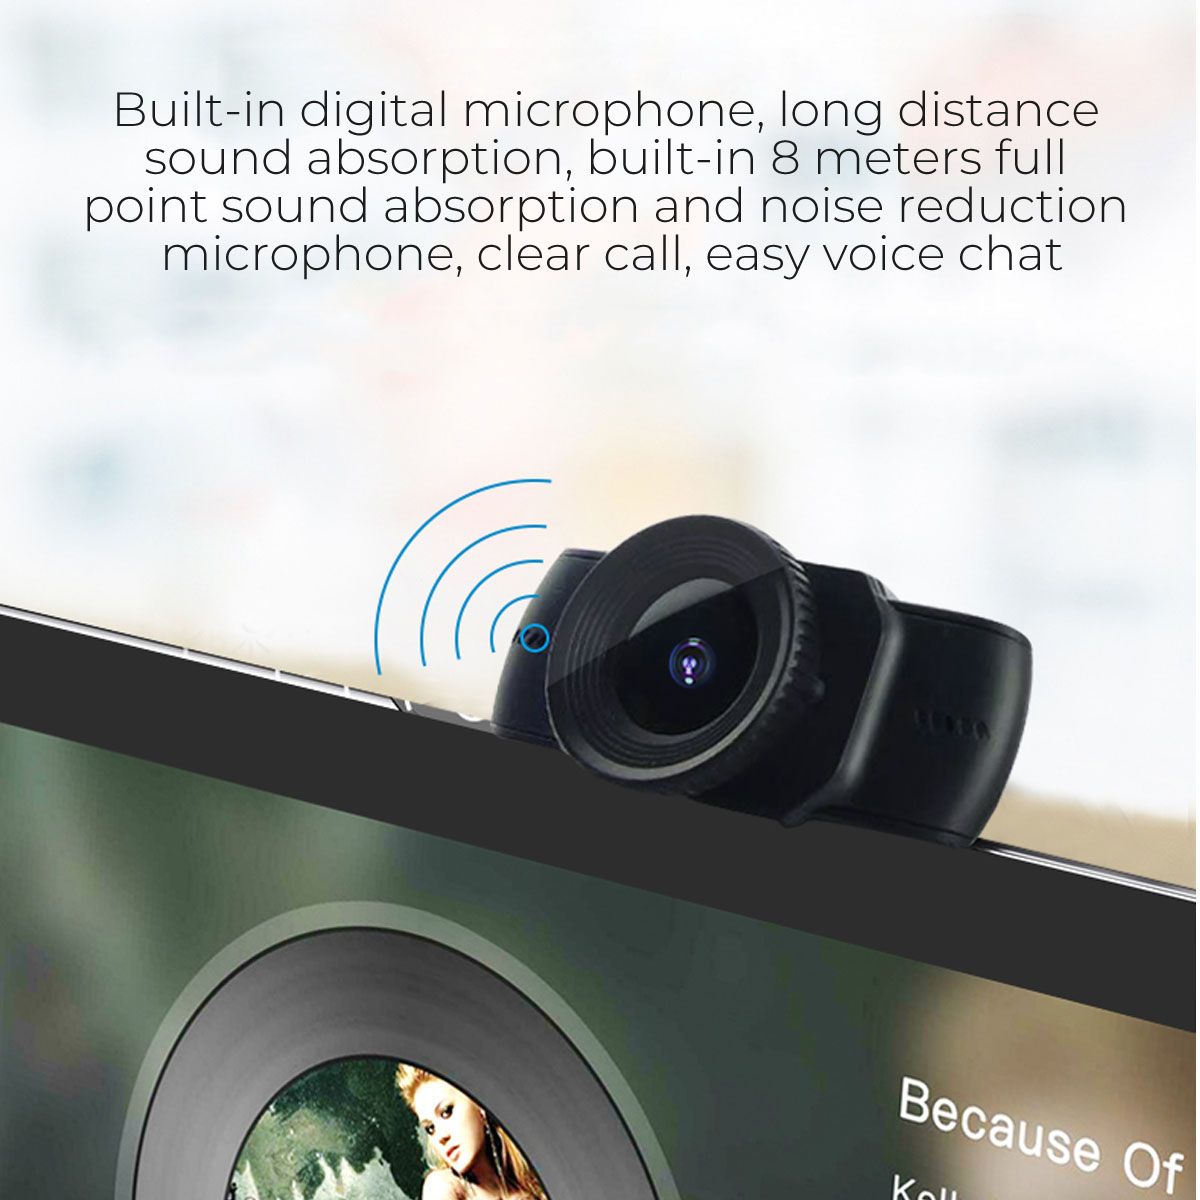 Webcam-1080P-USB-Video-Gamer-Camera-PC-Full-HD-Web-Cam-Built-in-Microphone-for-Youtube-Web-Camera-1724903